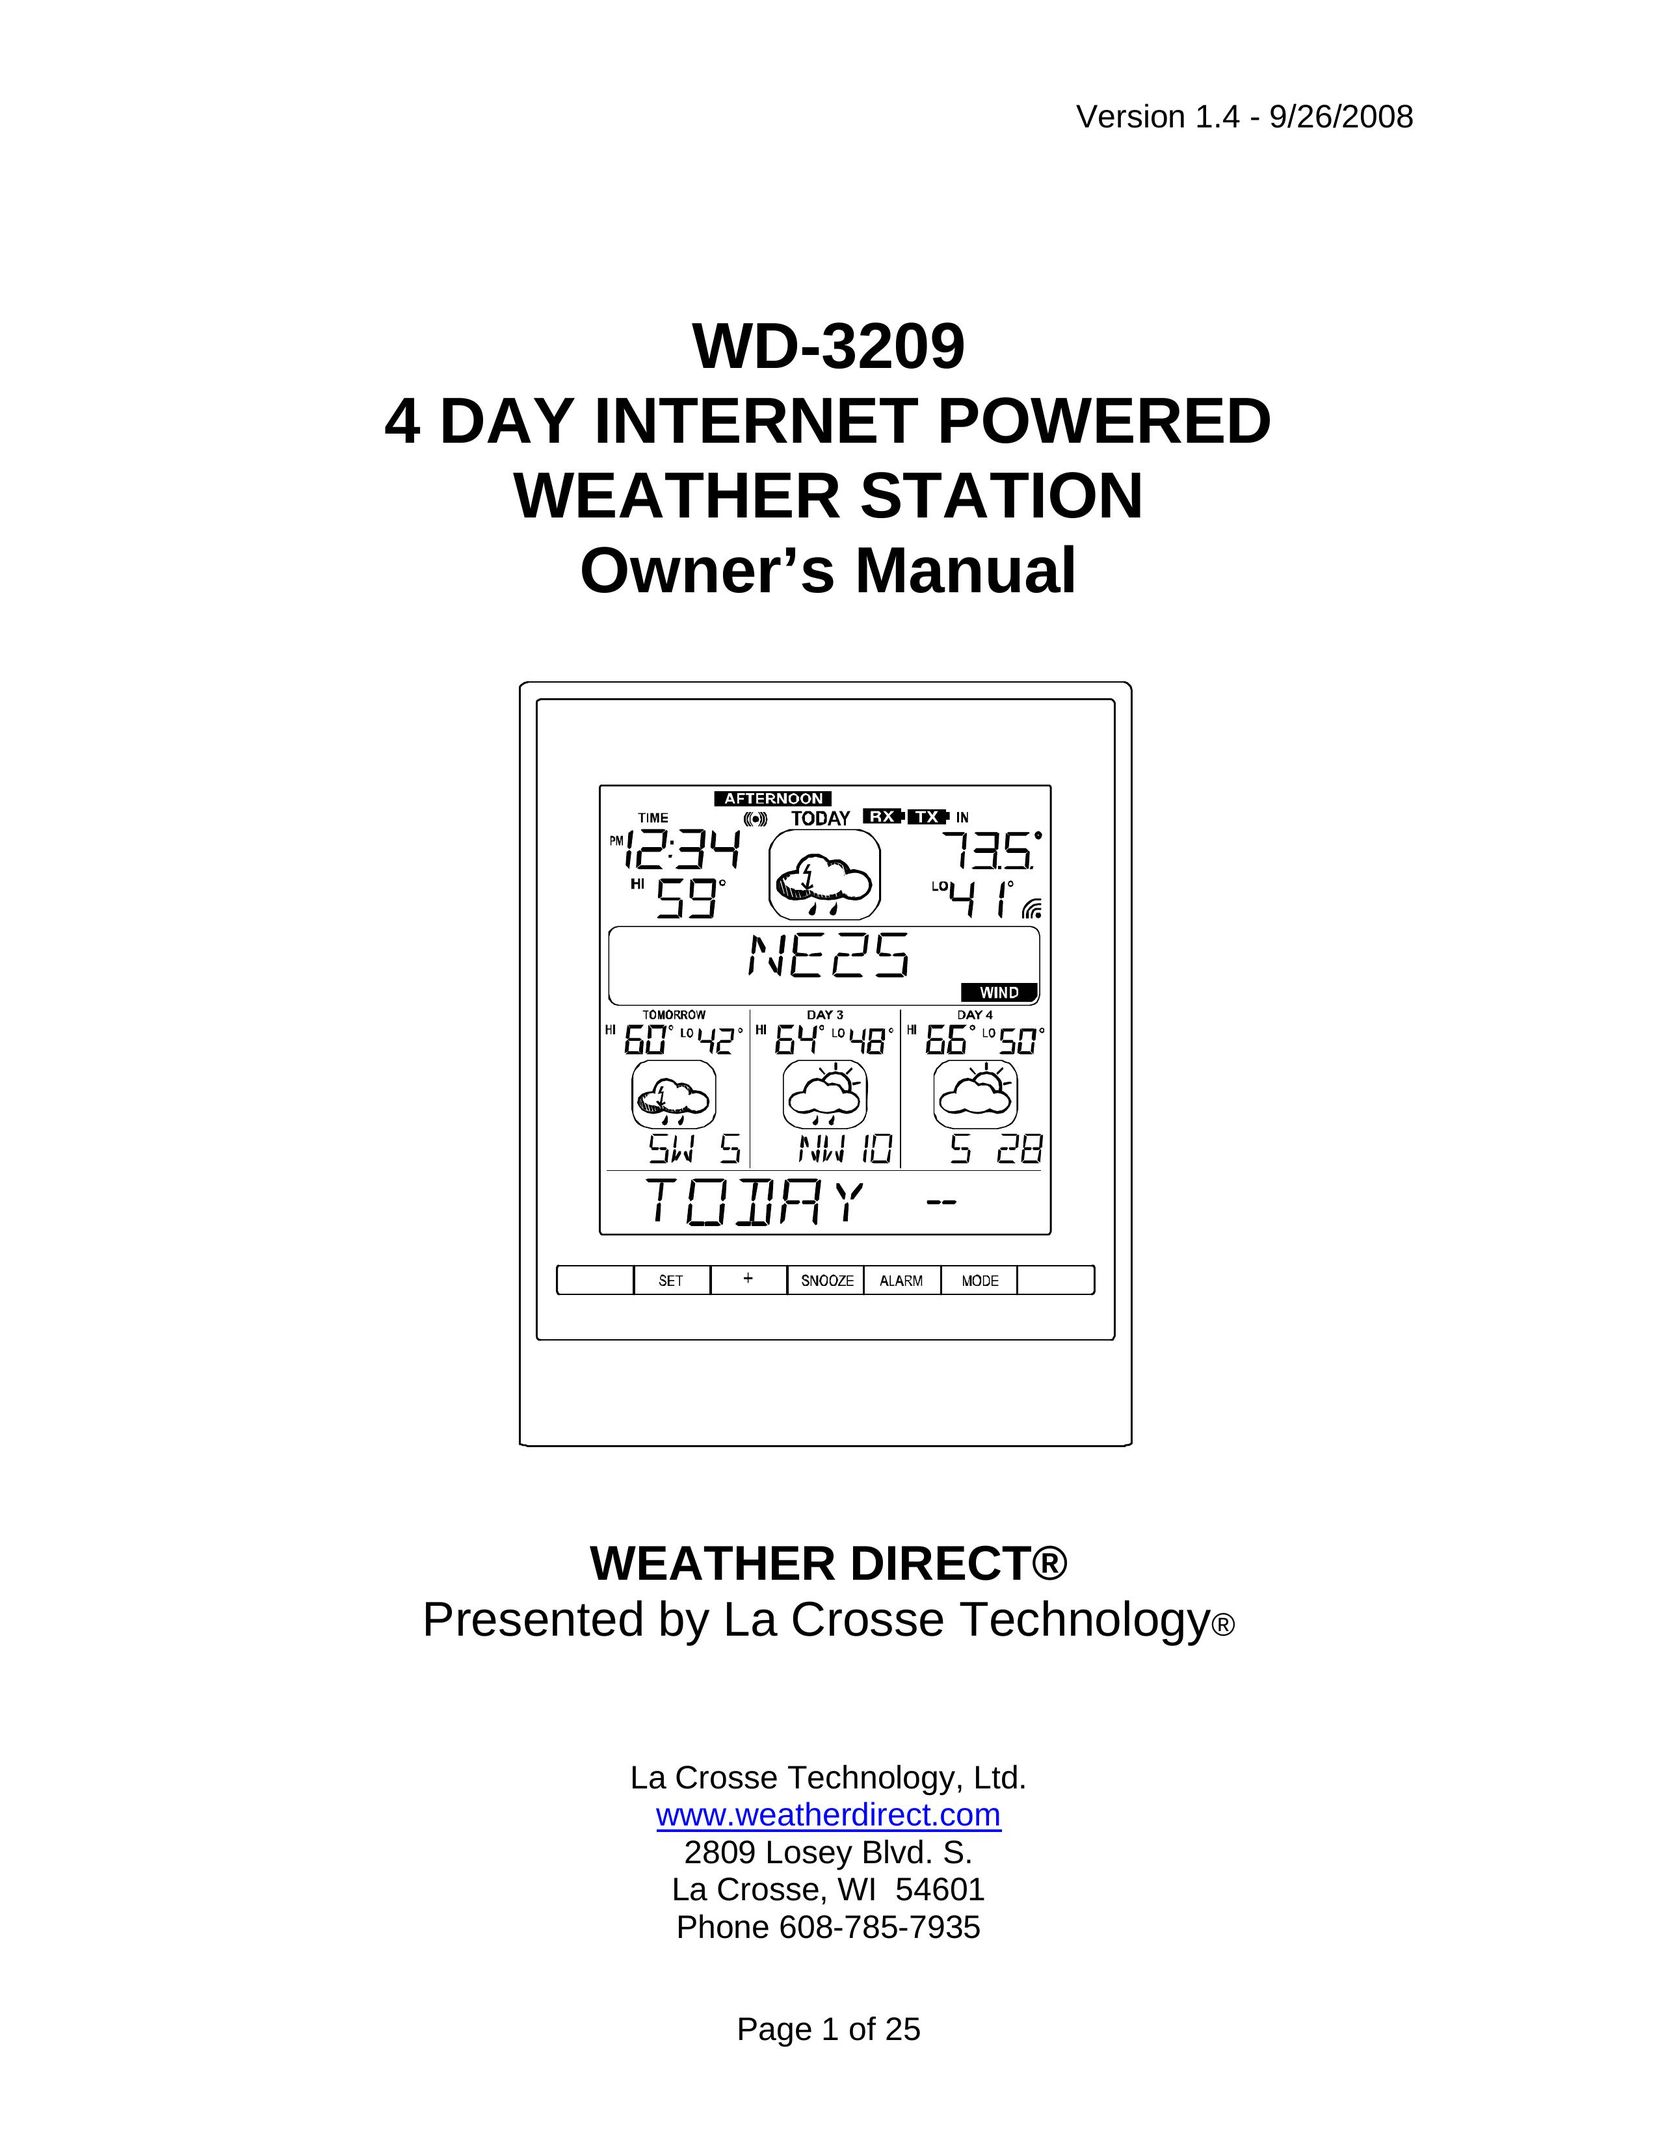 La Crosse Technology WD-3209 Portable Radio User Manual